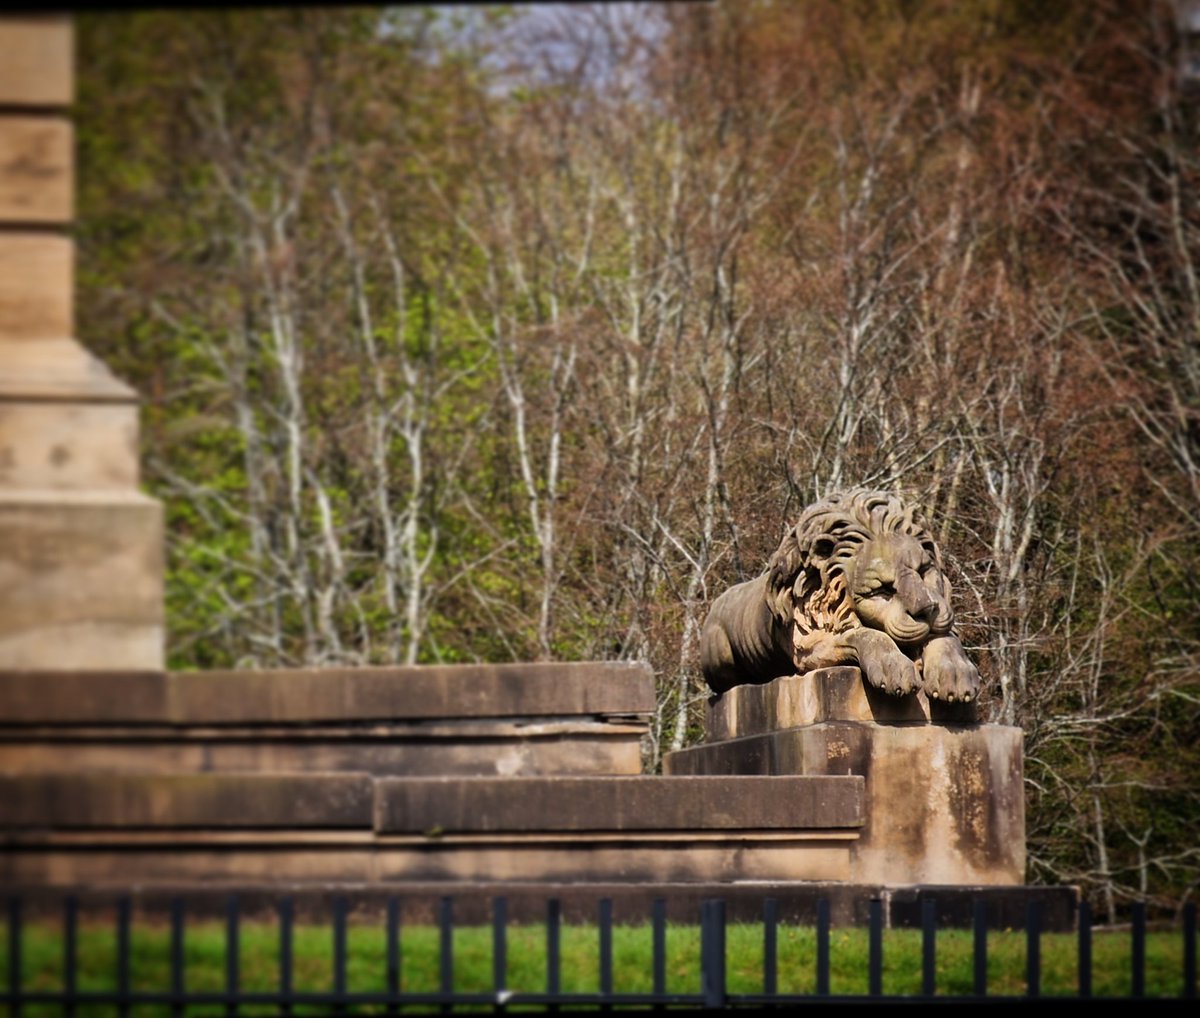 One lion basking in the sunshine.... @VisitScotland @VsitLanarkshire @ScotsMagazine #hamilton #lion #sculpture #scotland #scotspirit